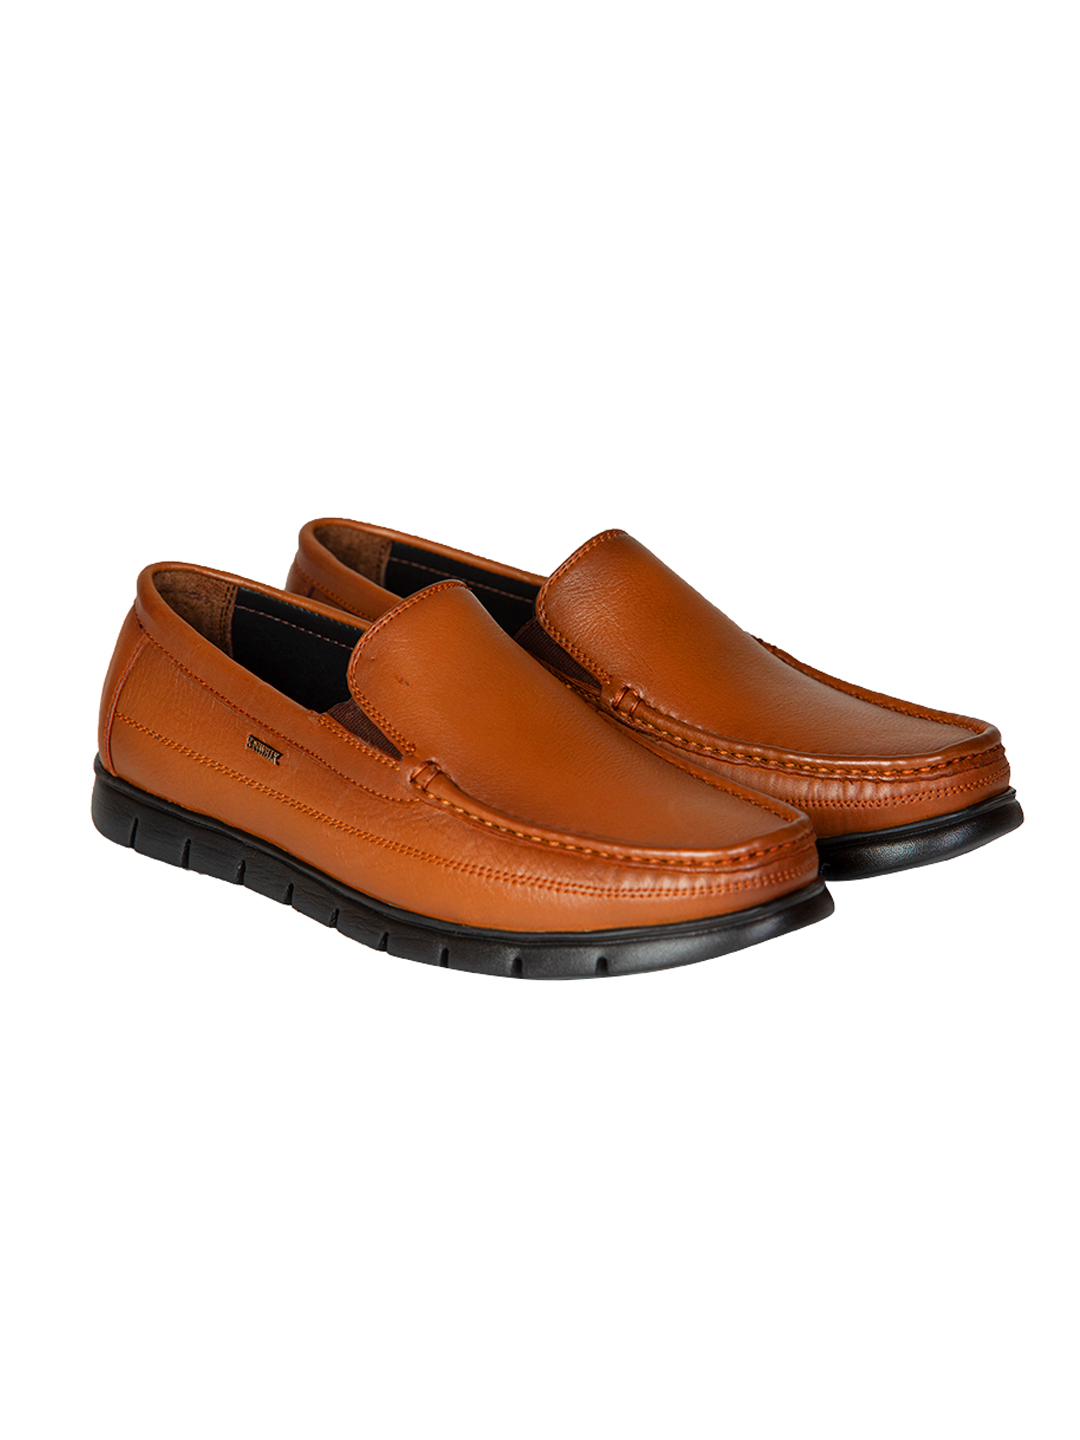 Buy Von Wellx Germany Comfort Tan Zion Shoes Online in Chennai